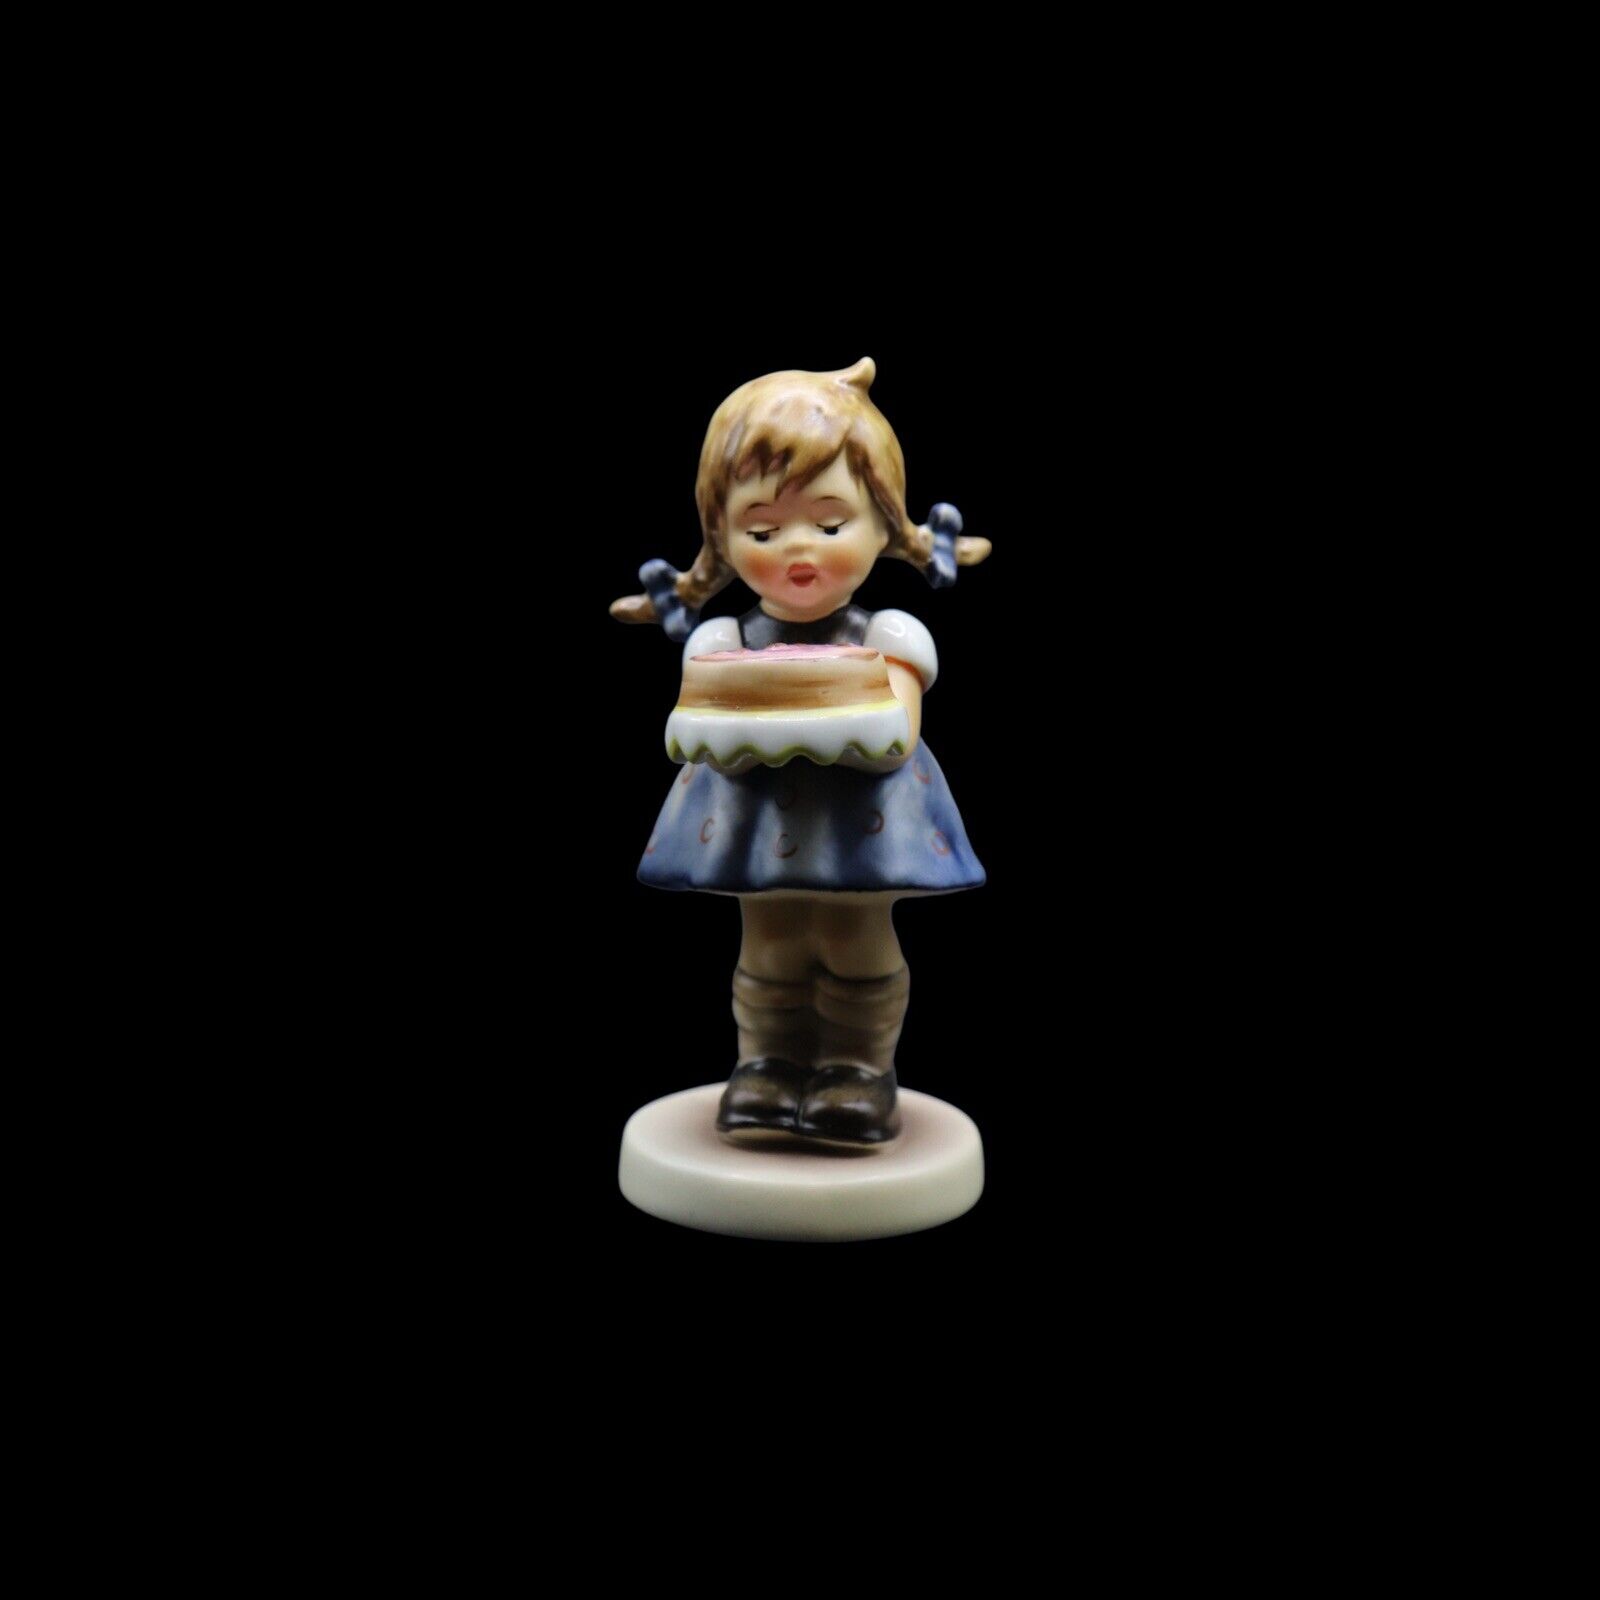 Goebel Hummel “Sweet As Can Be” #541 Figurine with Original Box and COA - TMK7